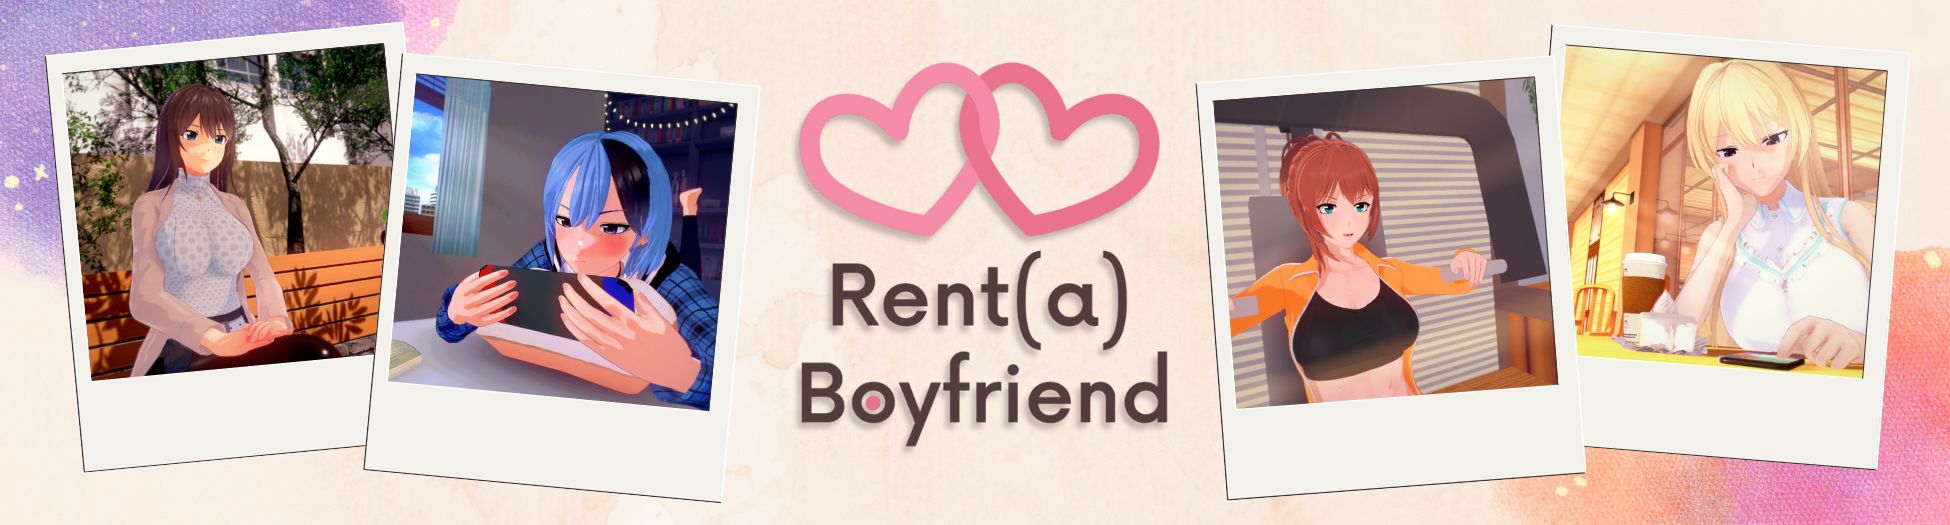 Rent(a)Boyfriend poster